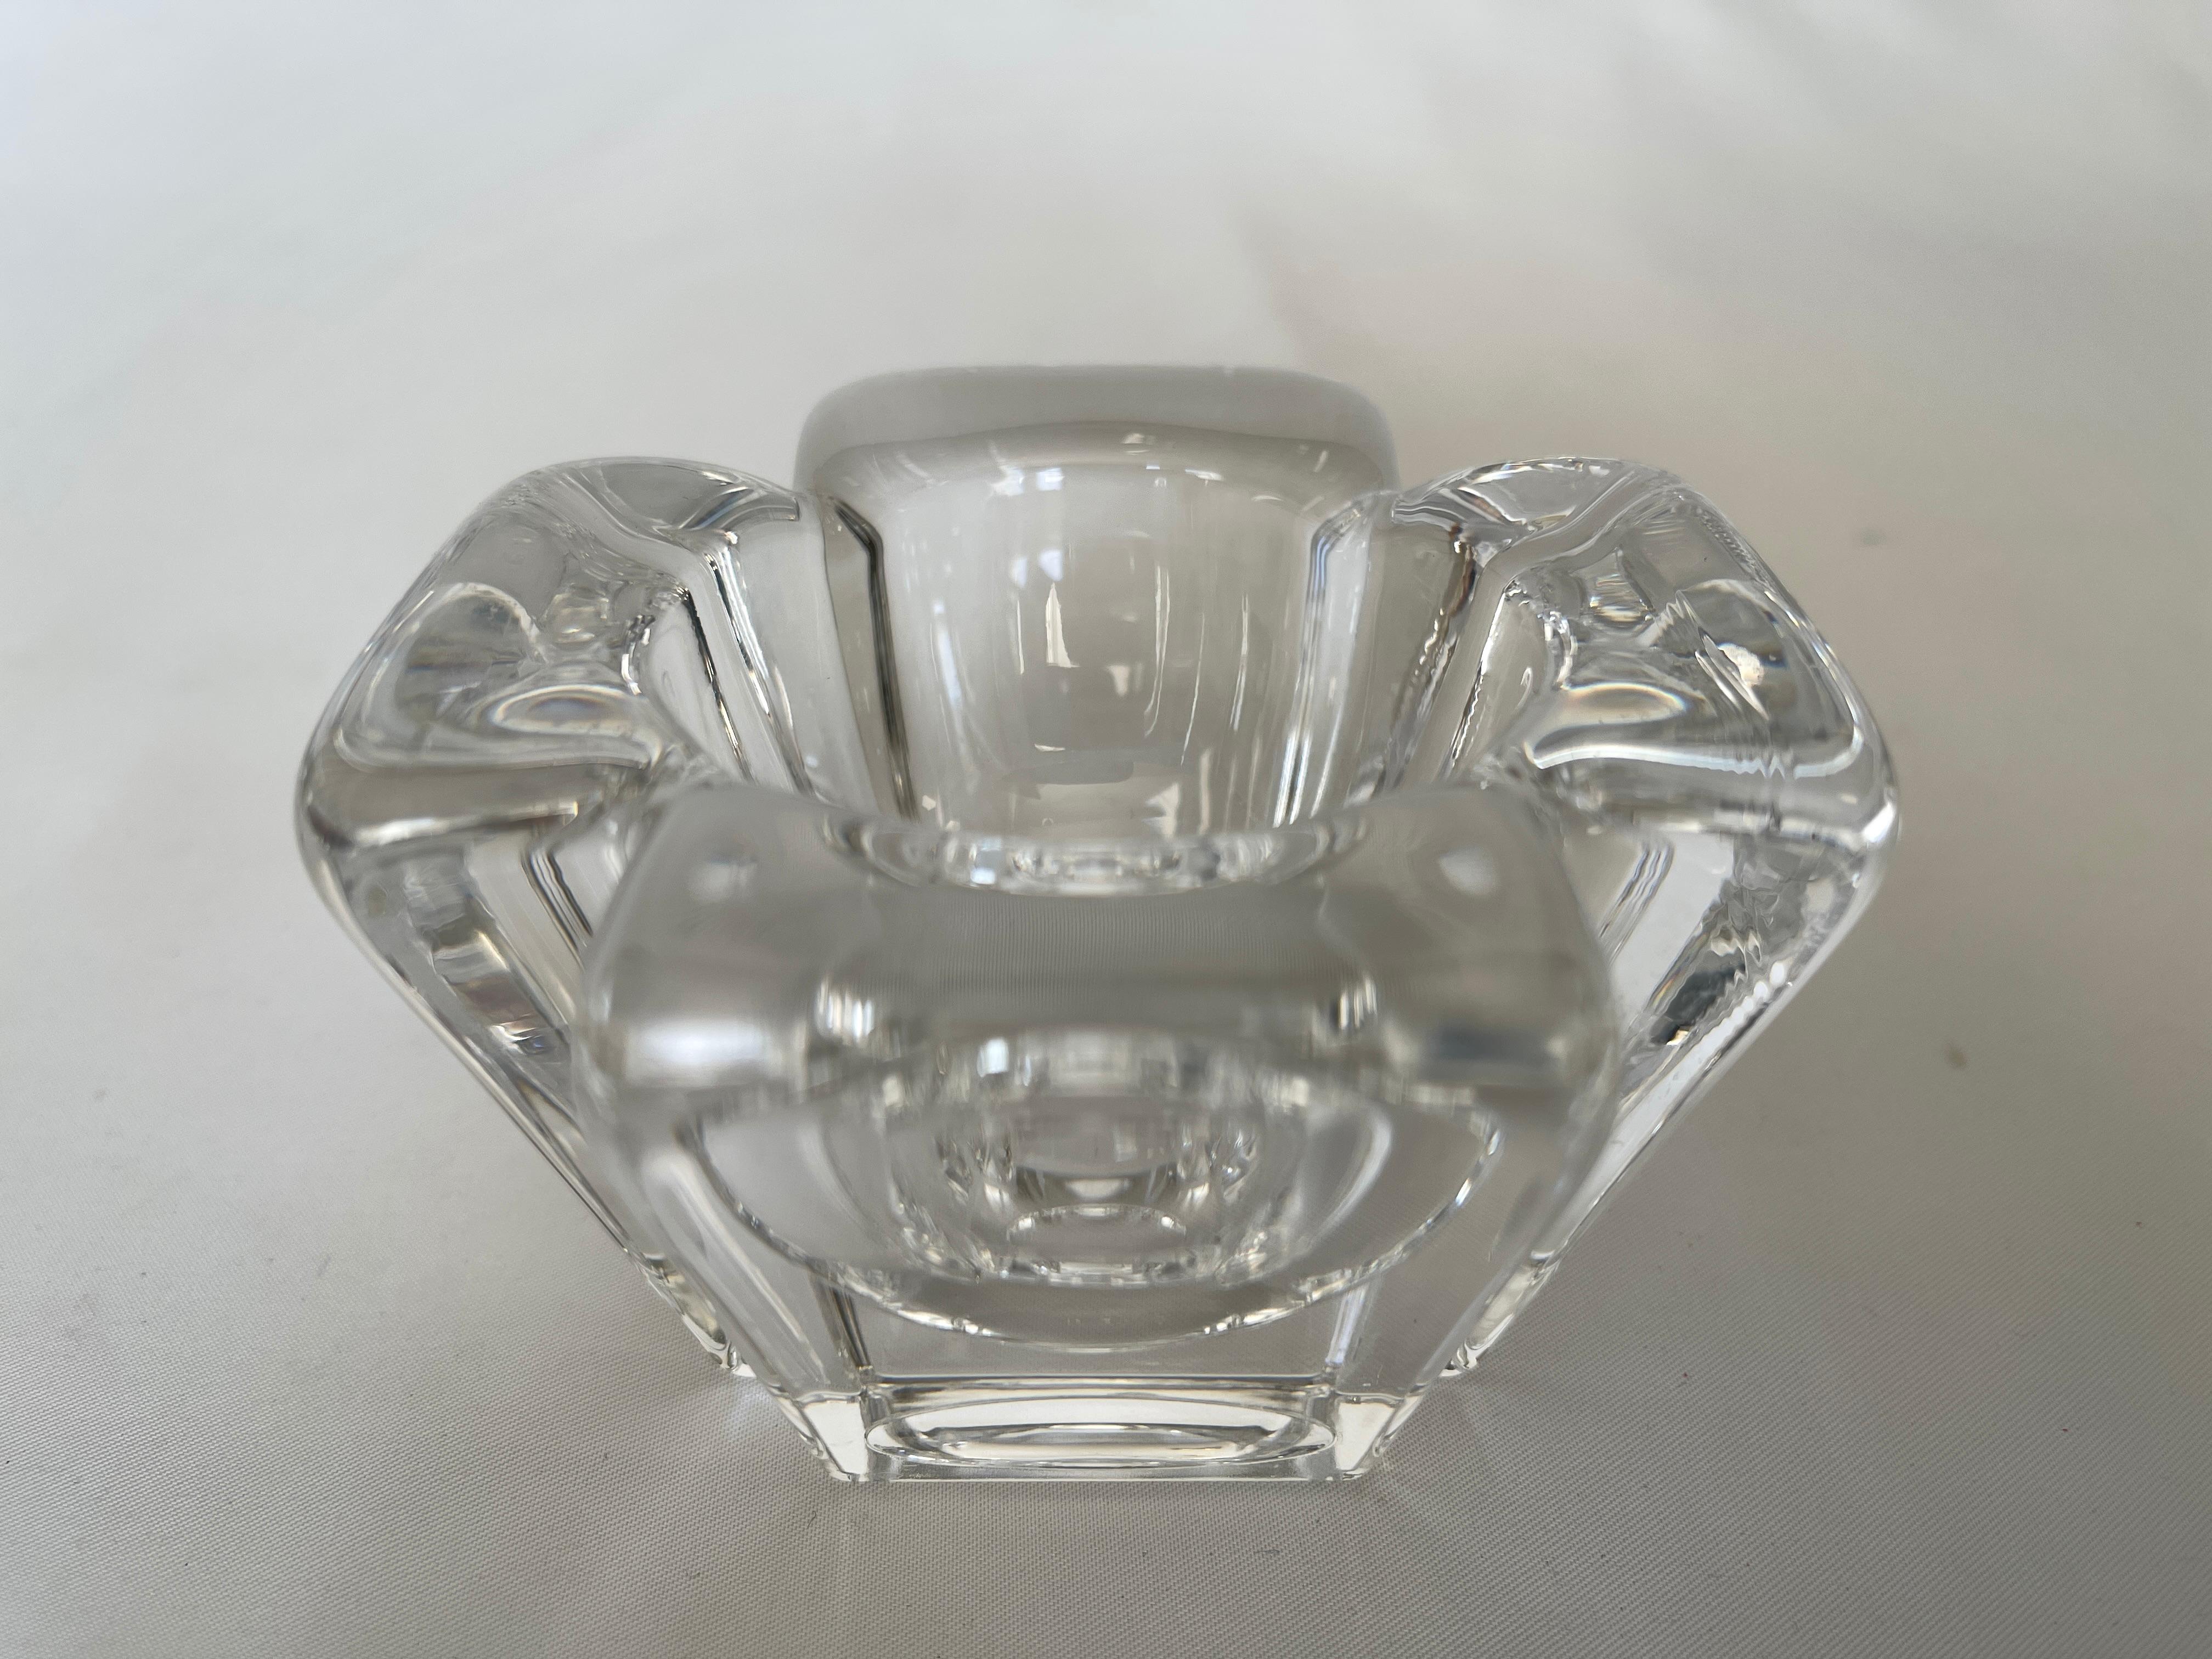 1980's Scandinavian modern crystal votive candle holder.
Hand crafted in Sweden and signed on bottom, Orrefors.
 